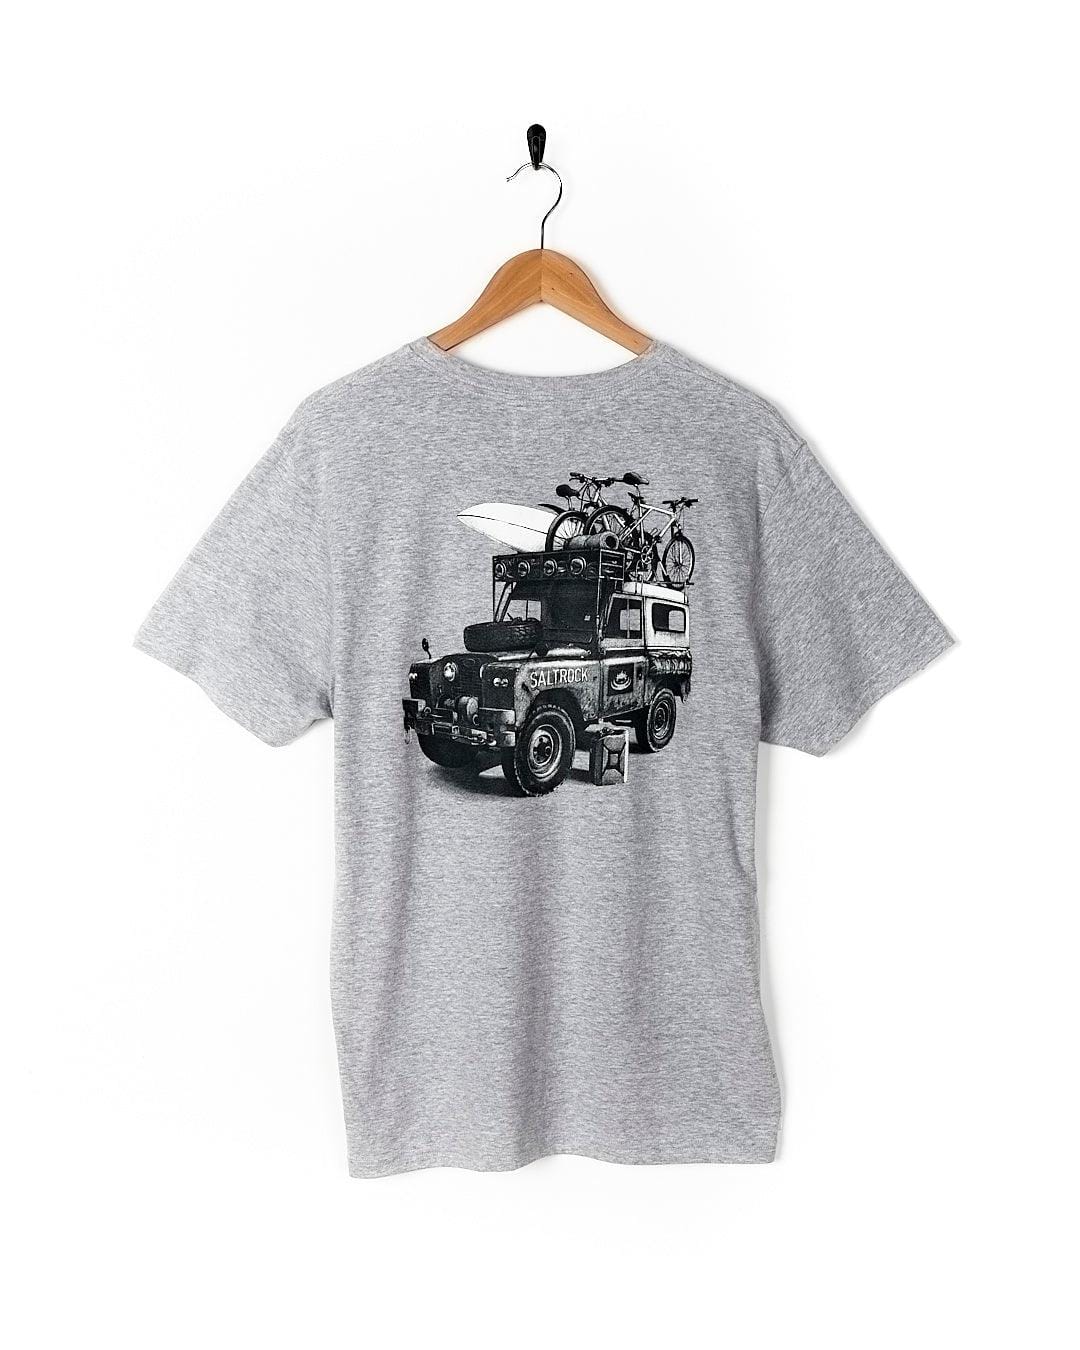 All Terrain - Mens Short Sleeve T-Shirt - Grey - Saltrock